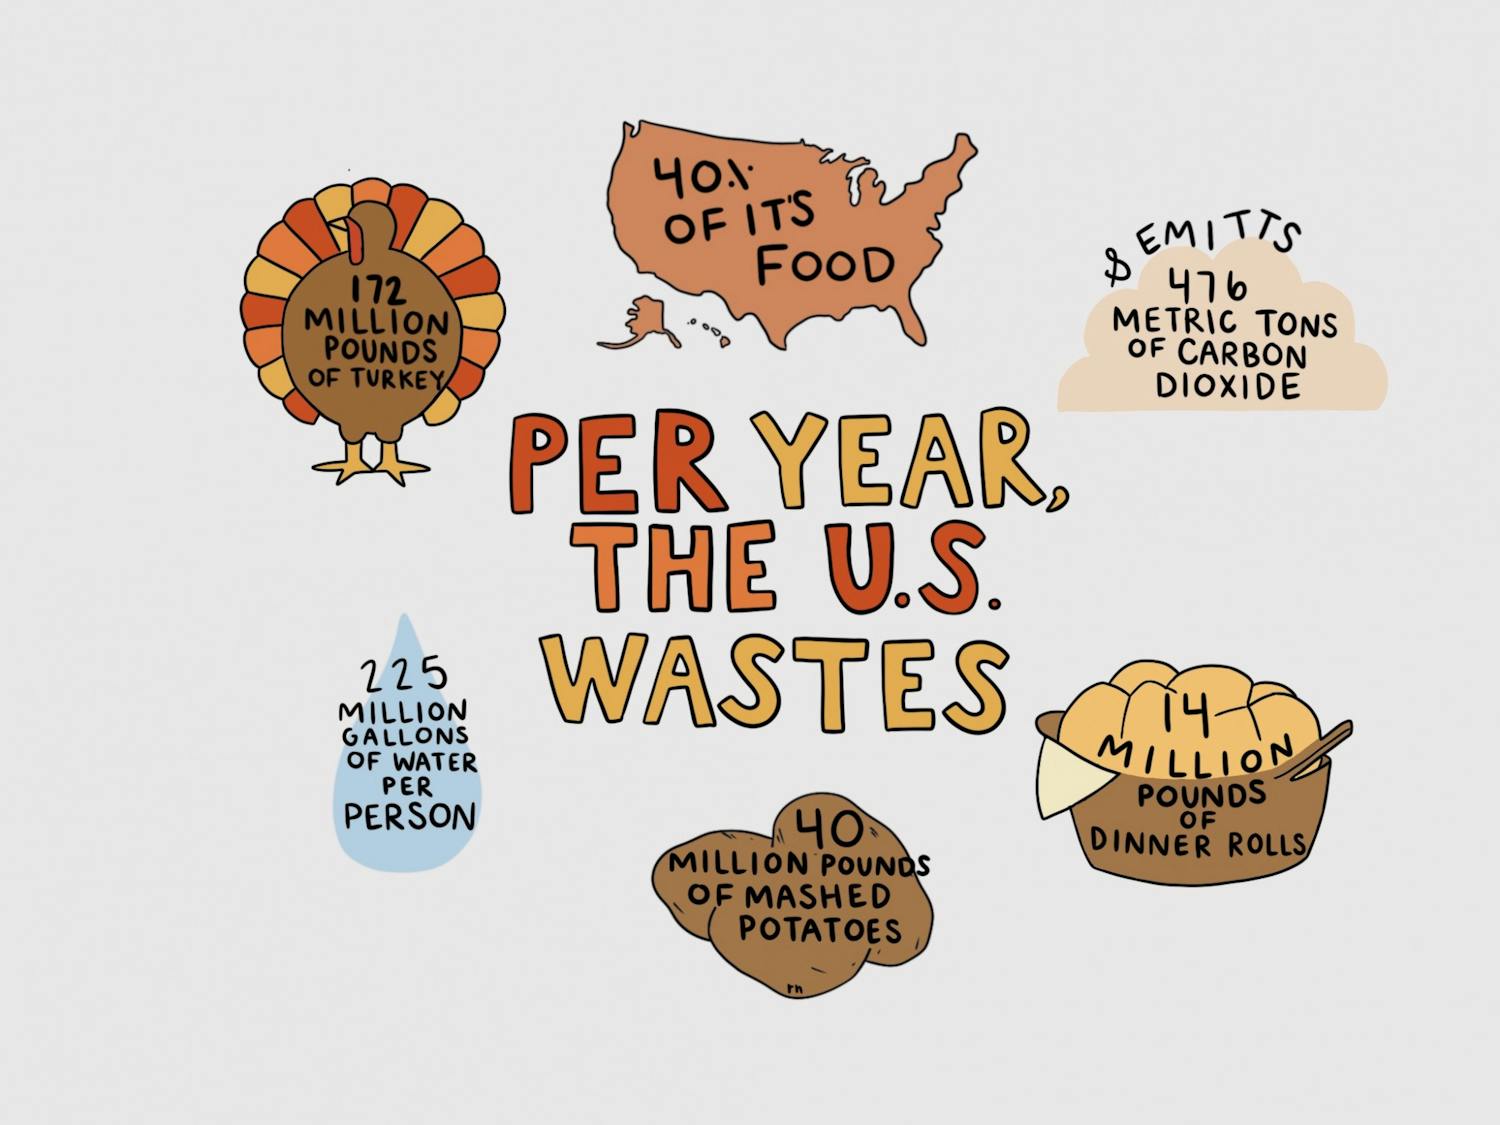 Reduce Food Waste